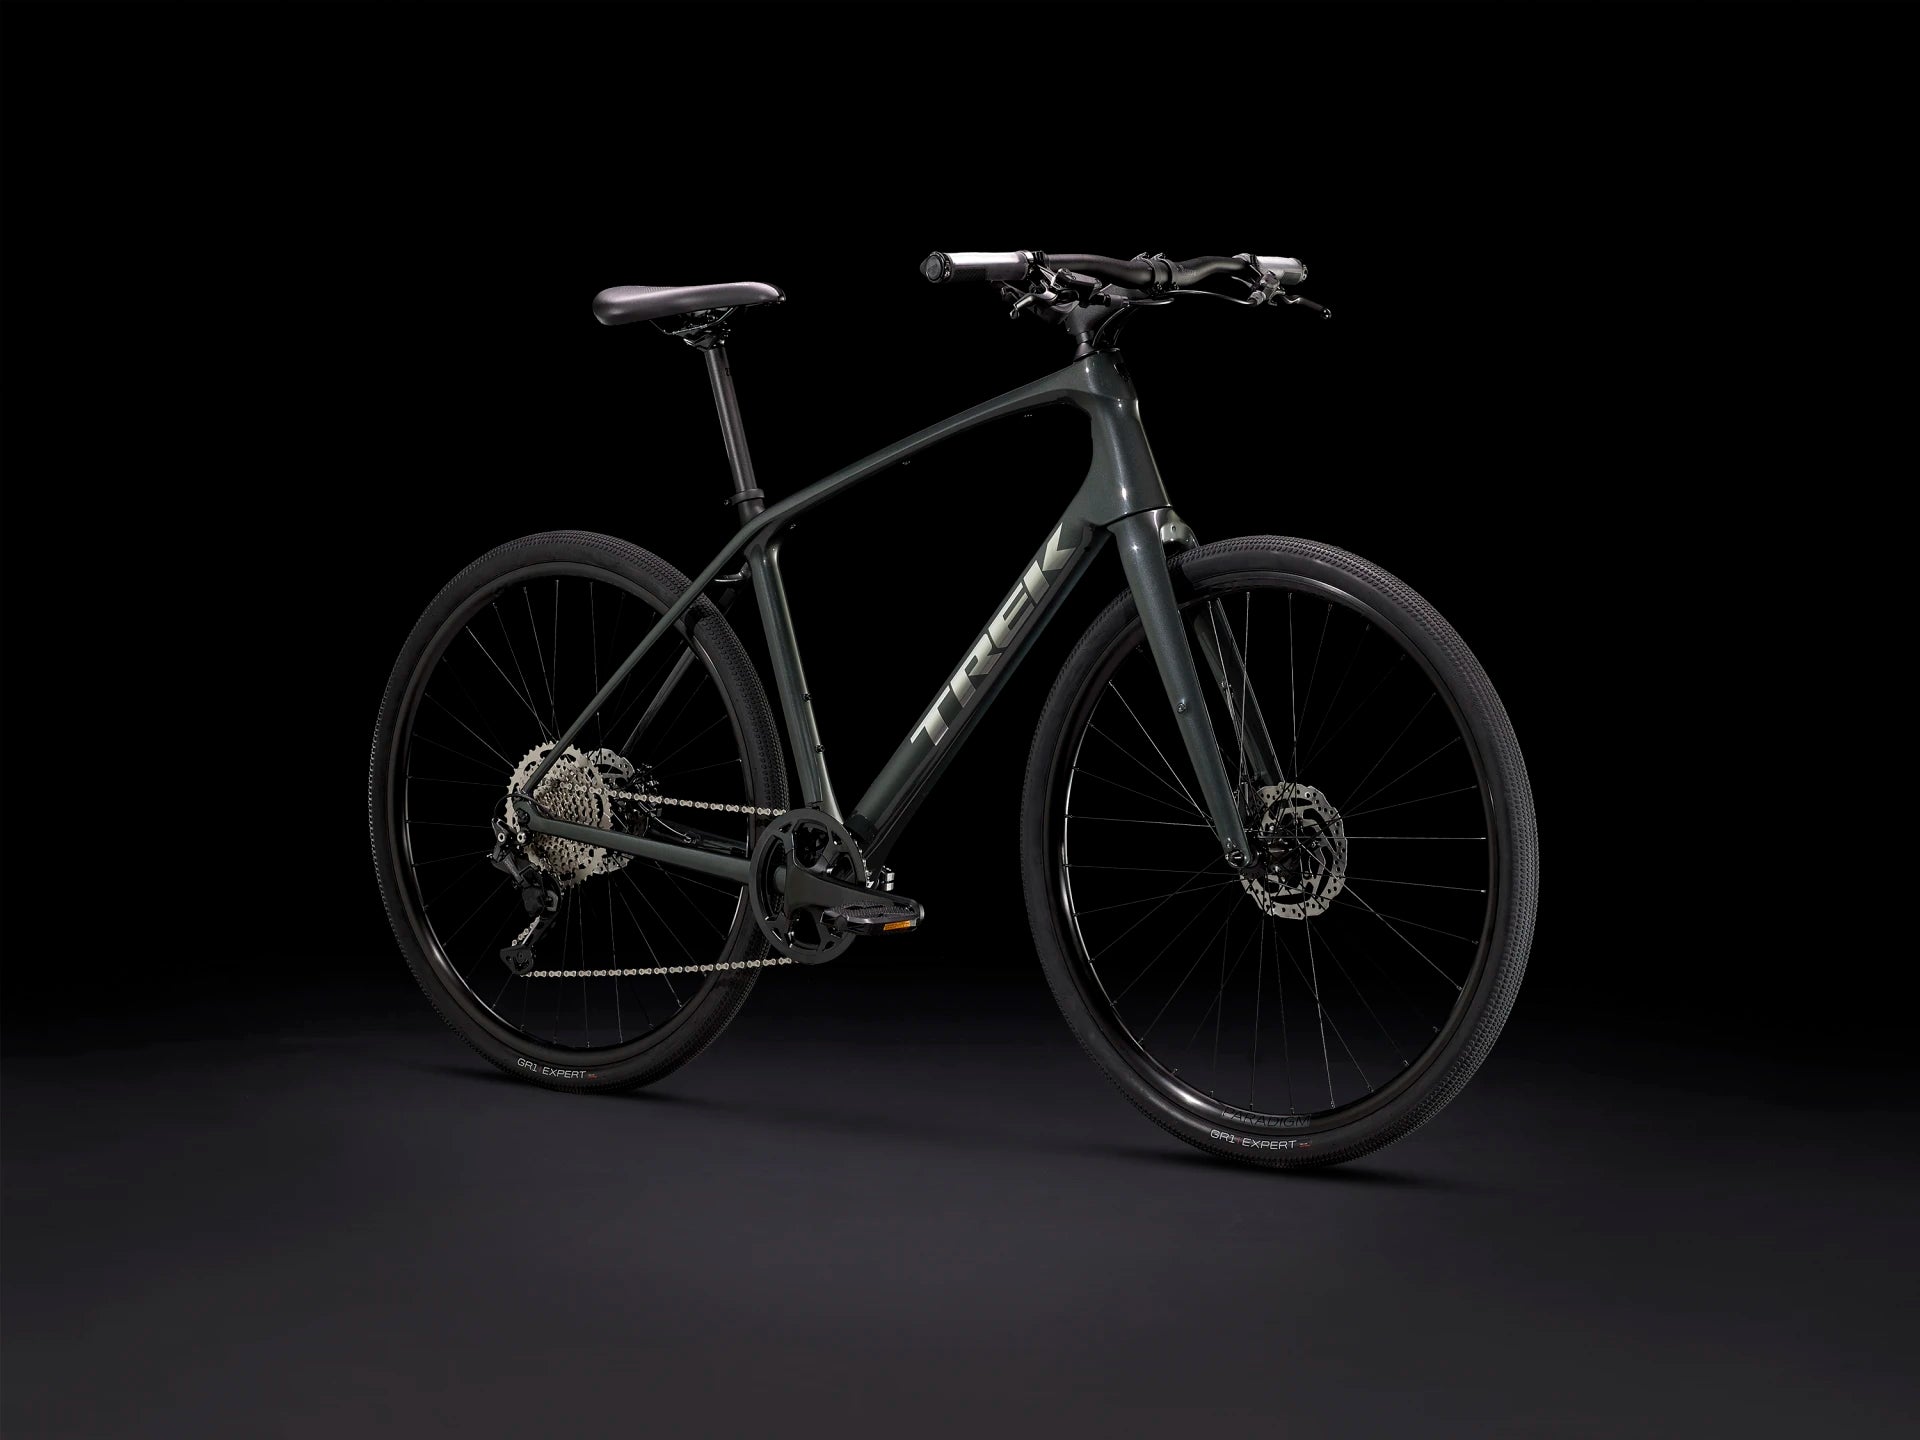 FX Sport 4 Carbon- Trek Bikes- Hybrid Bikes- Fitness Bikes